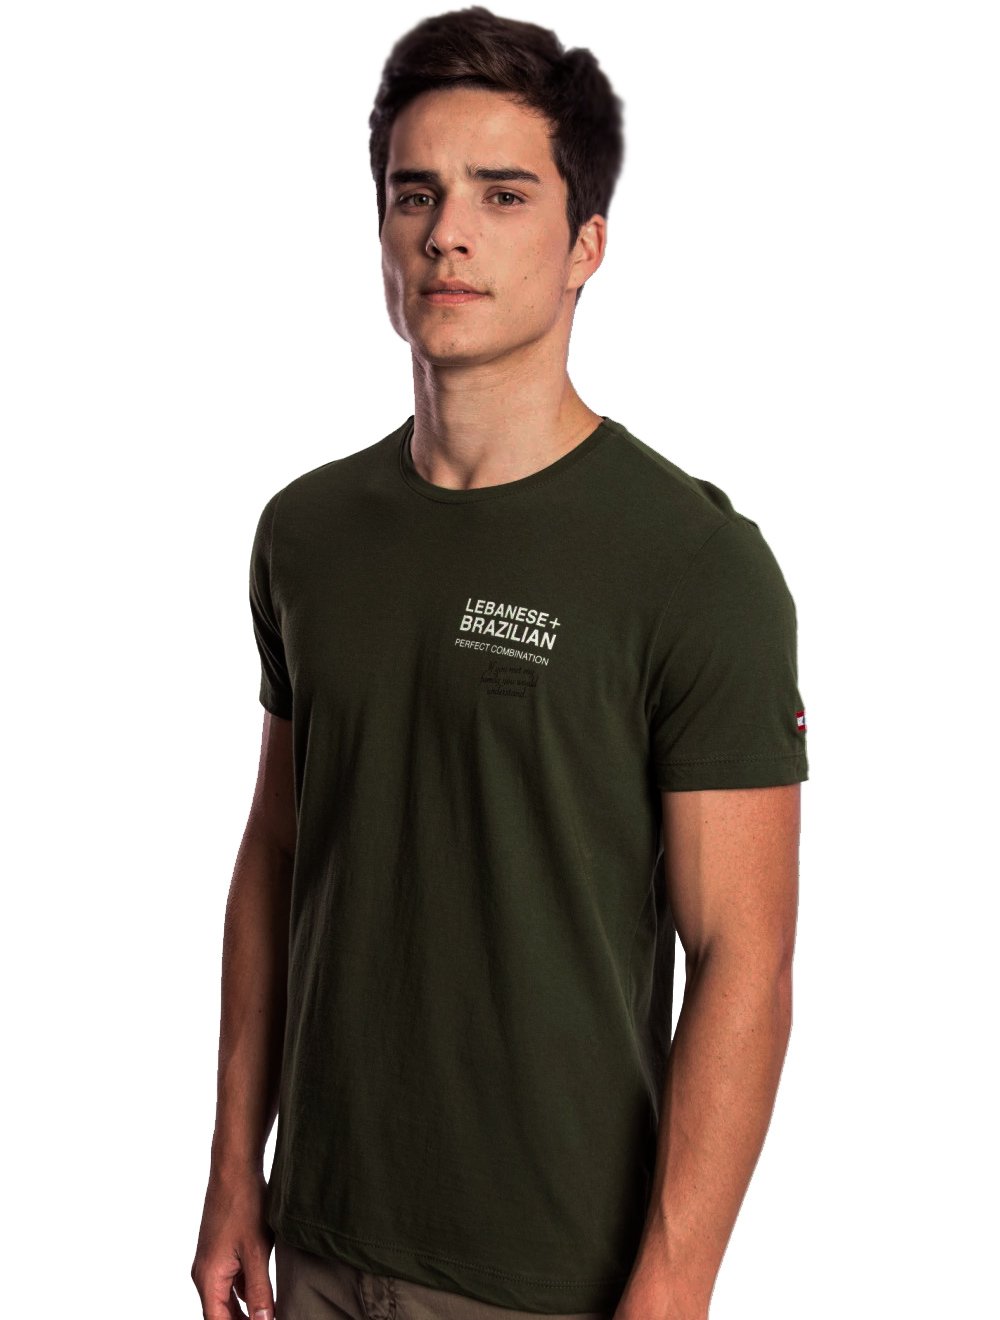 Camiseta Sergio K Masculina BR-LIB Combination Verde Militar